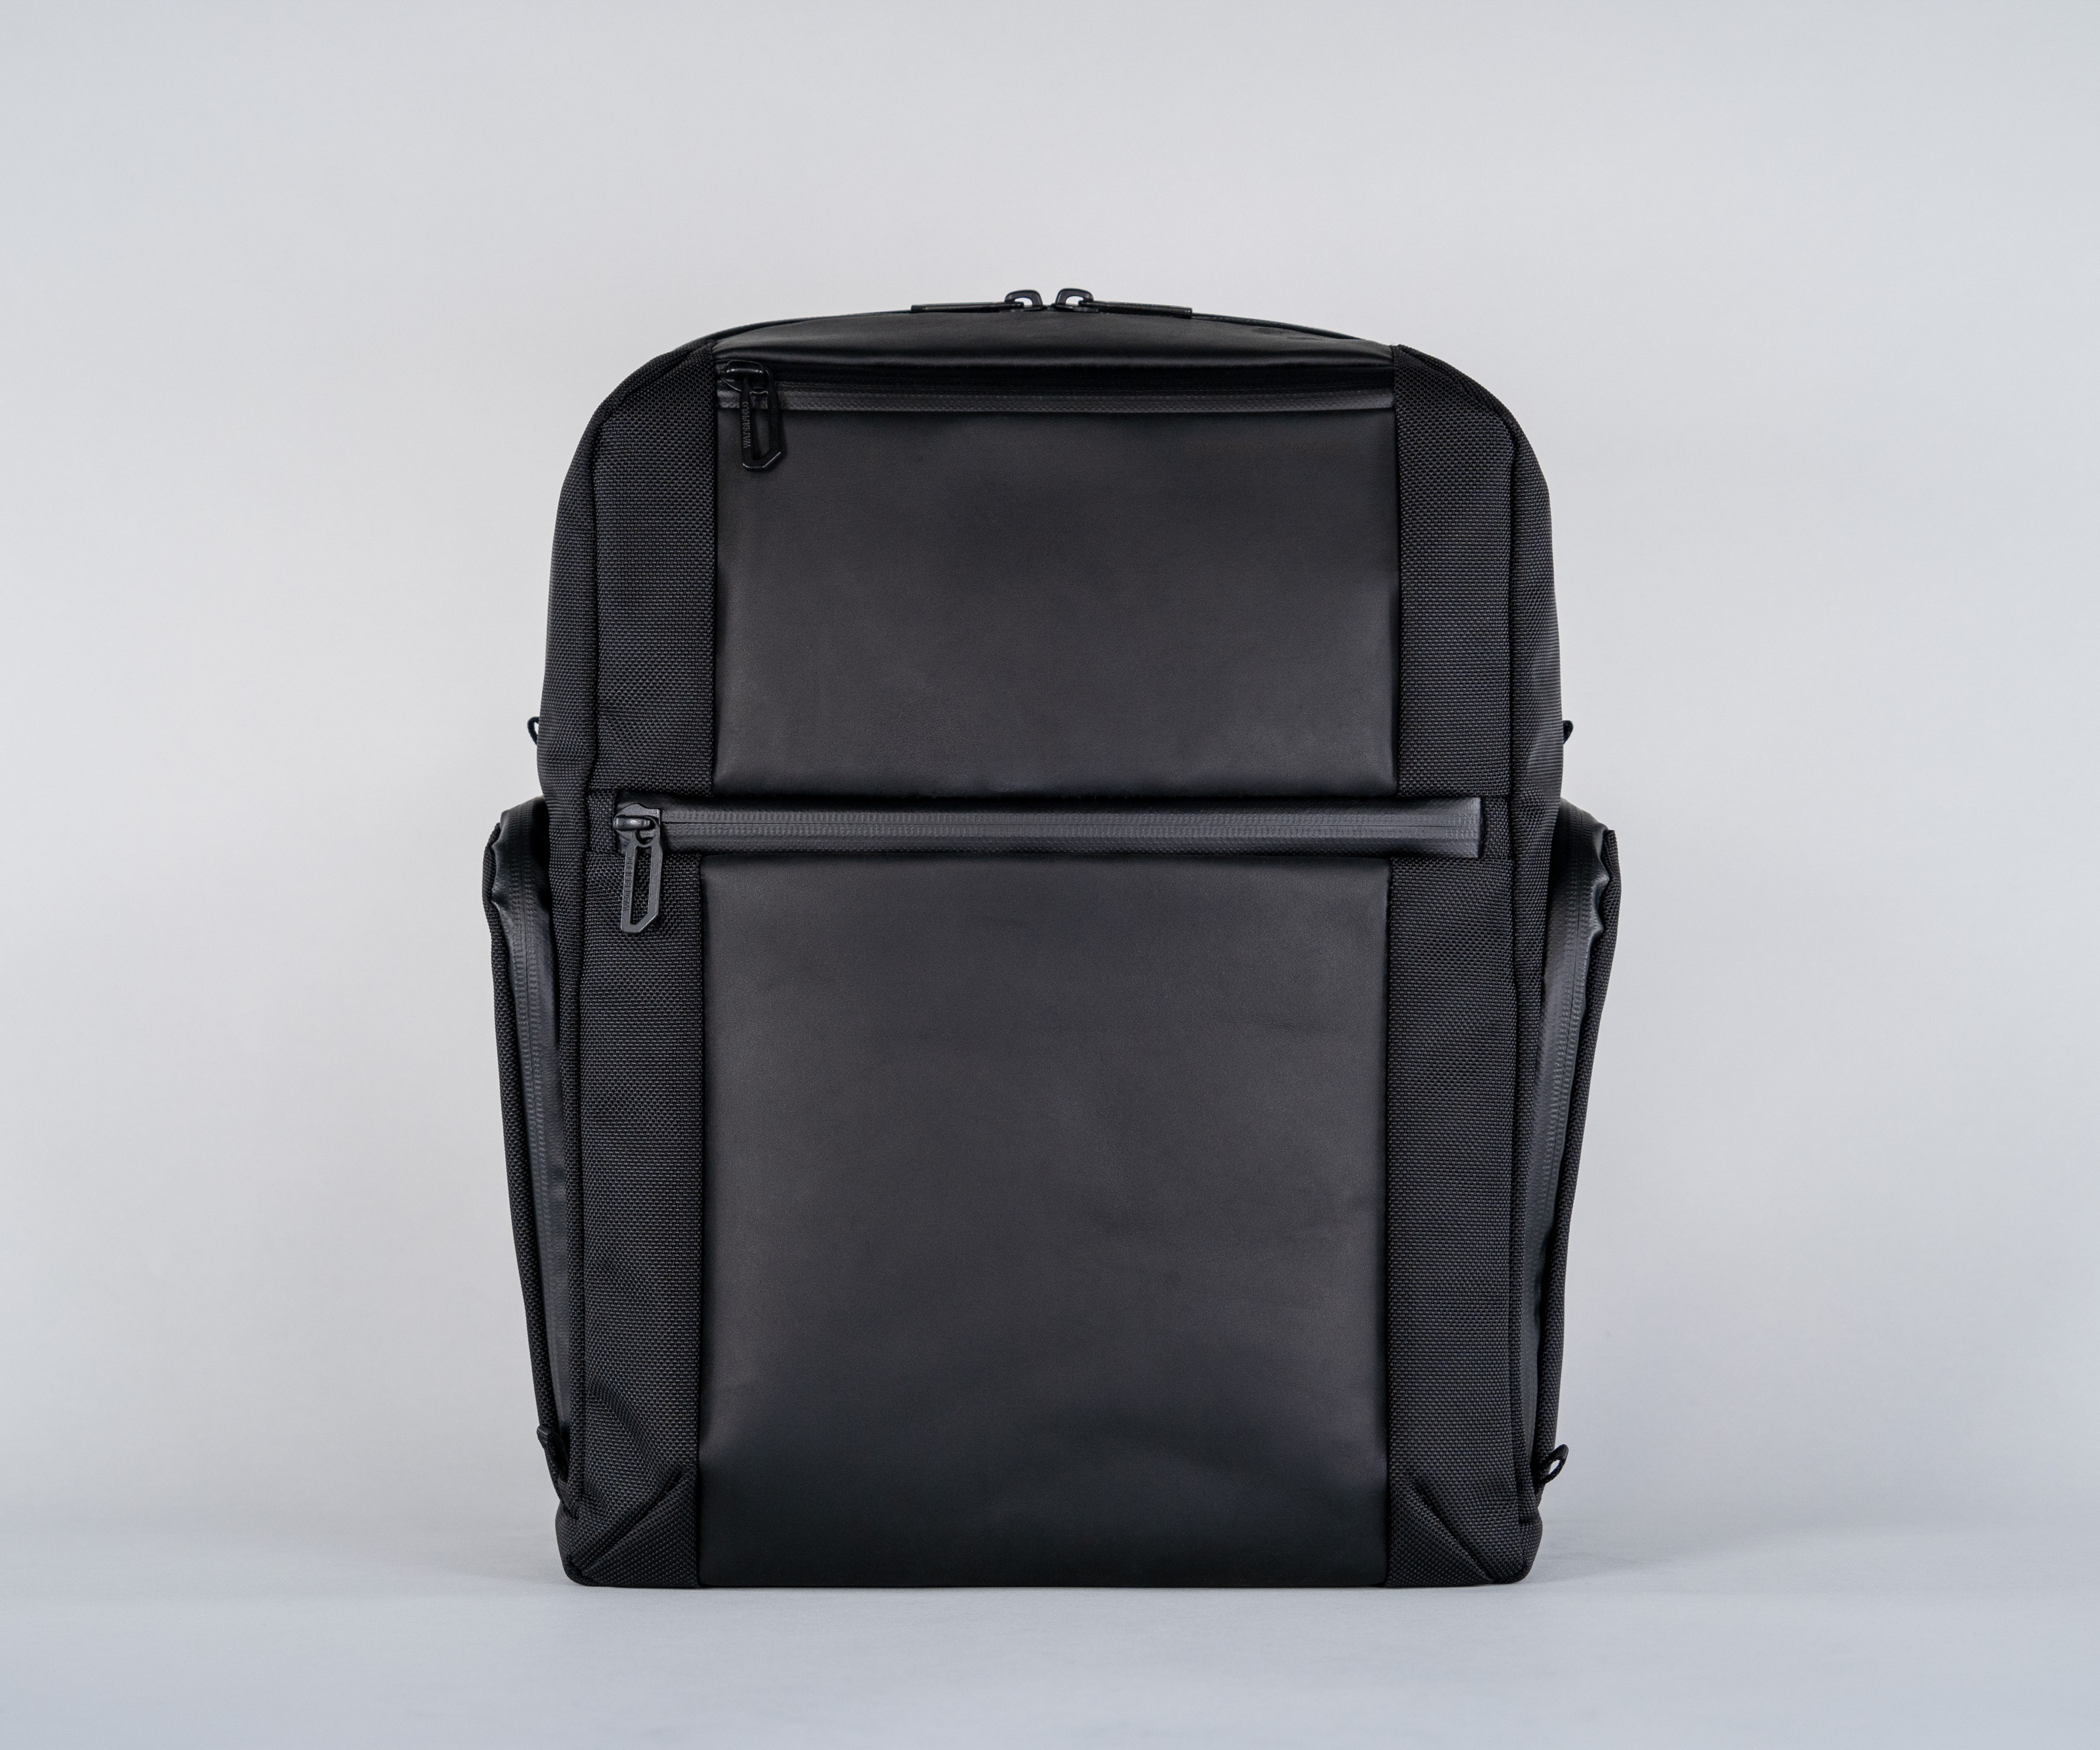 Black ballistic nylon and full-grain black leather colorway